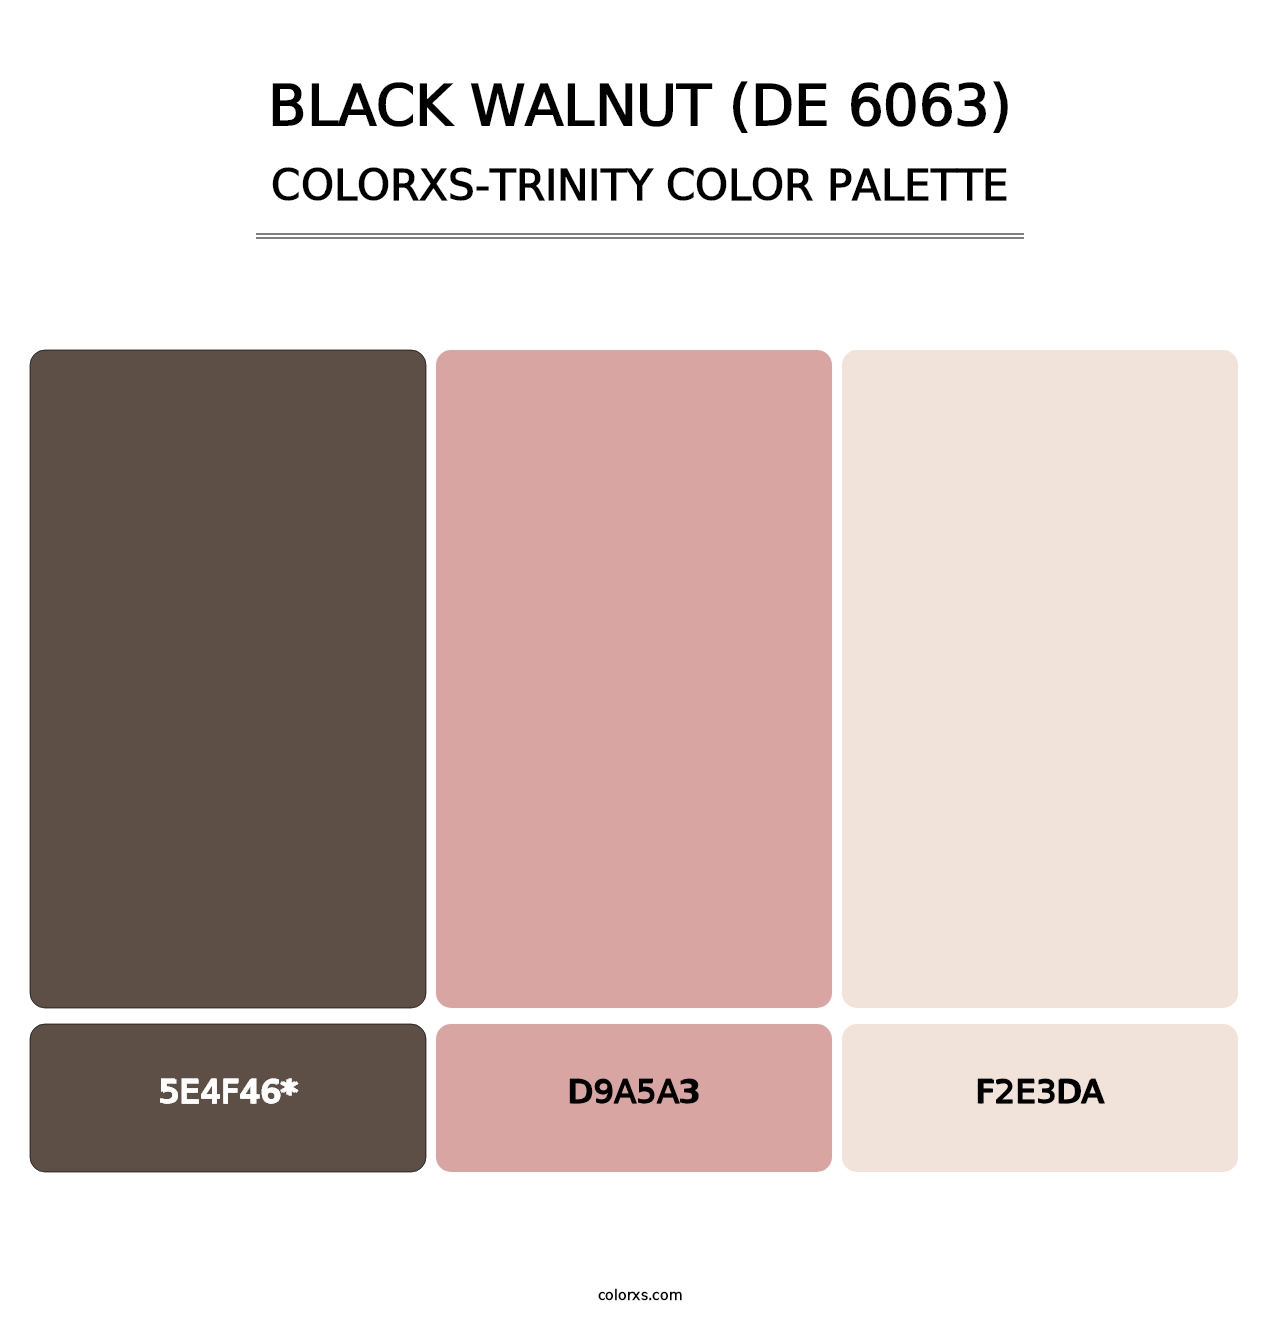 Black Walnut (DE 6063) - Colorxs Trinity Palette